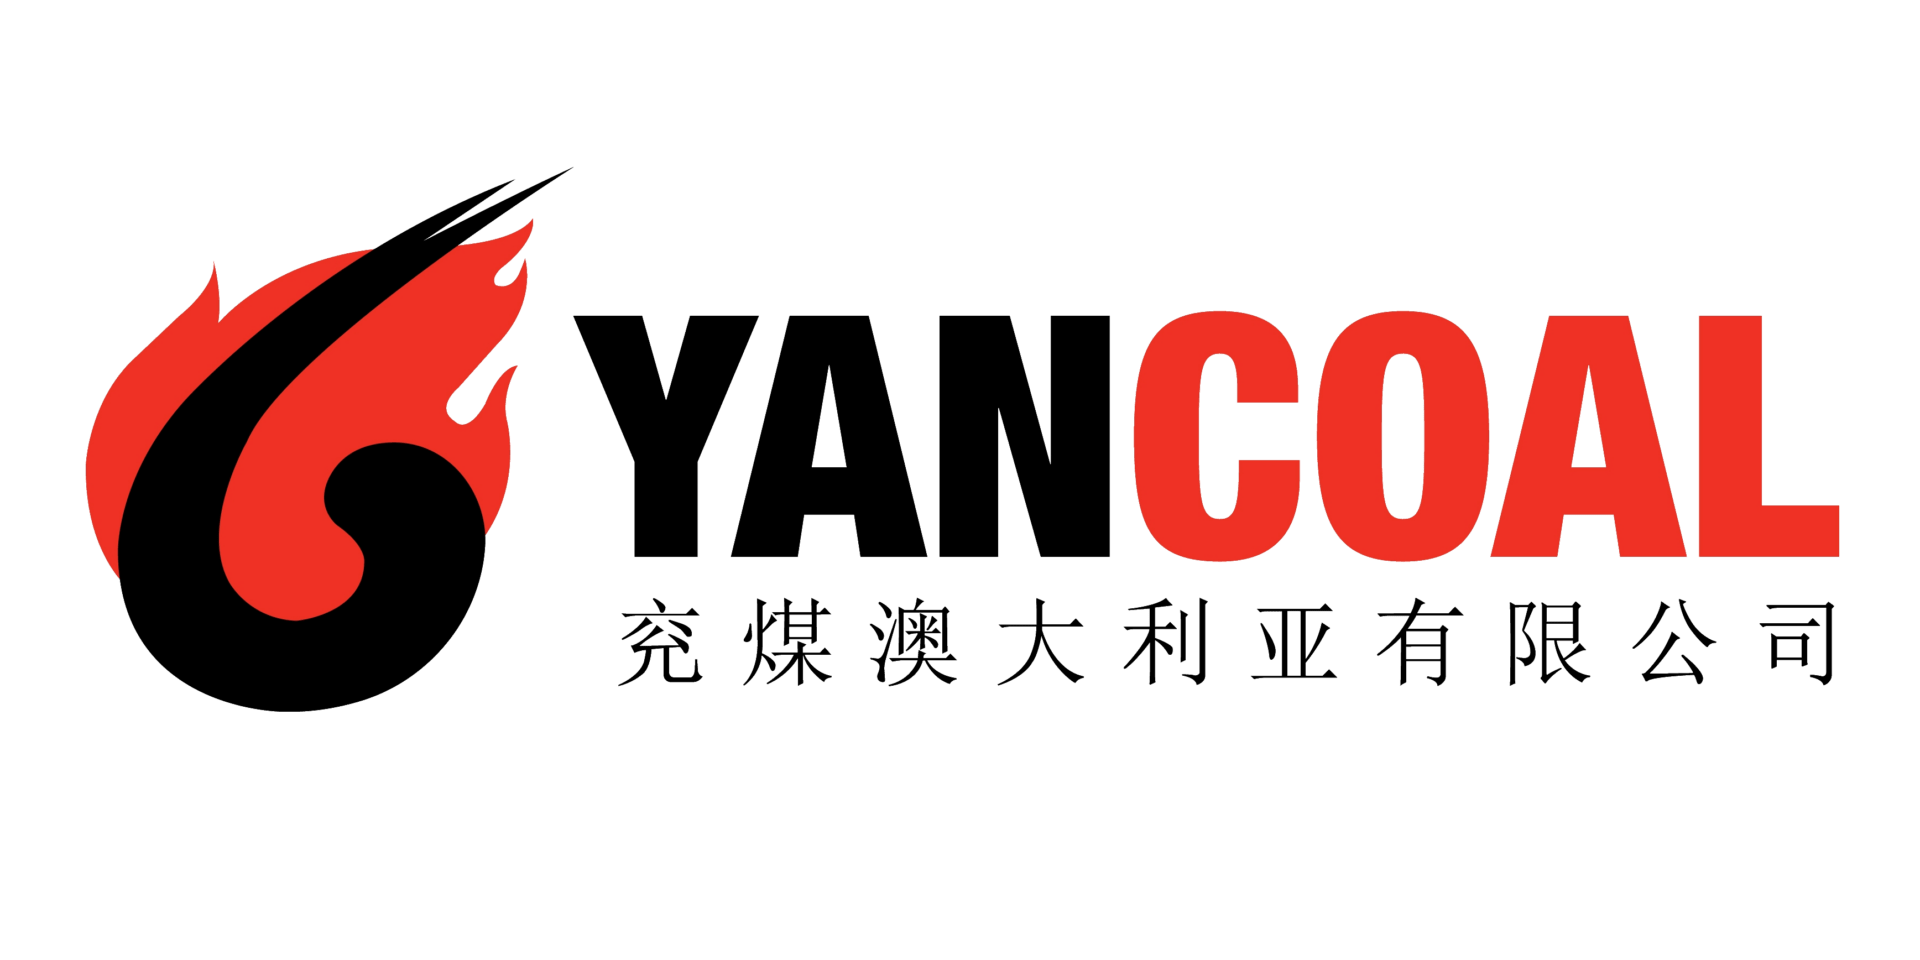 Yancoal